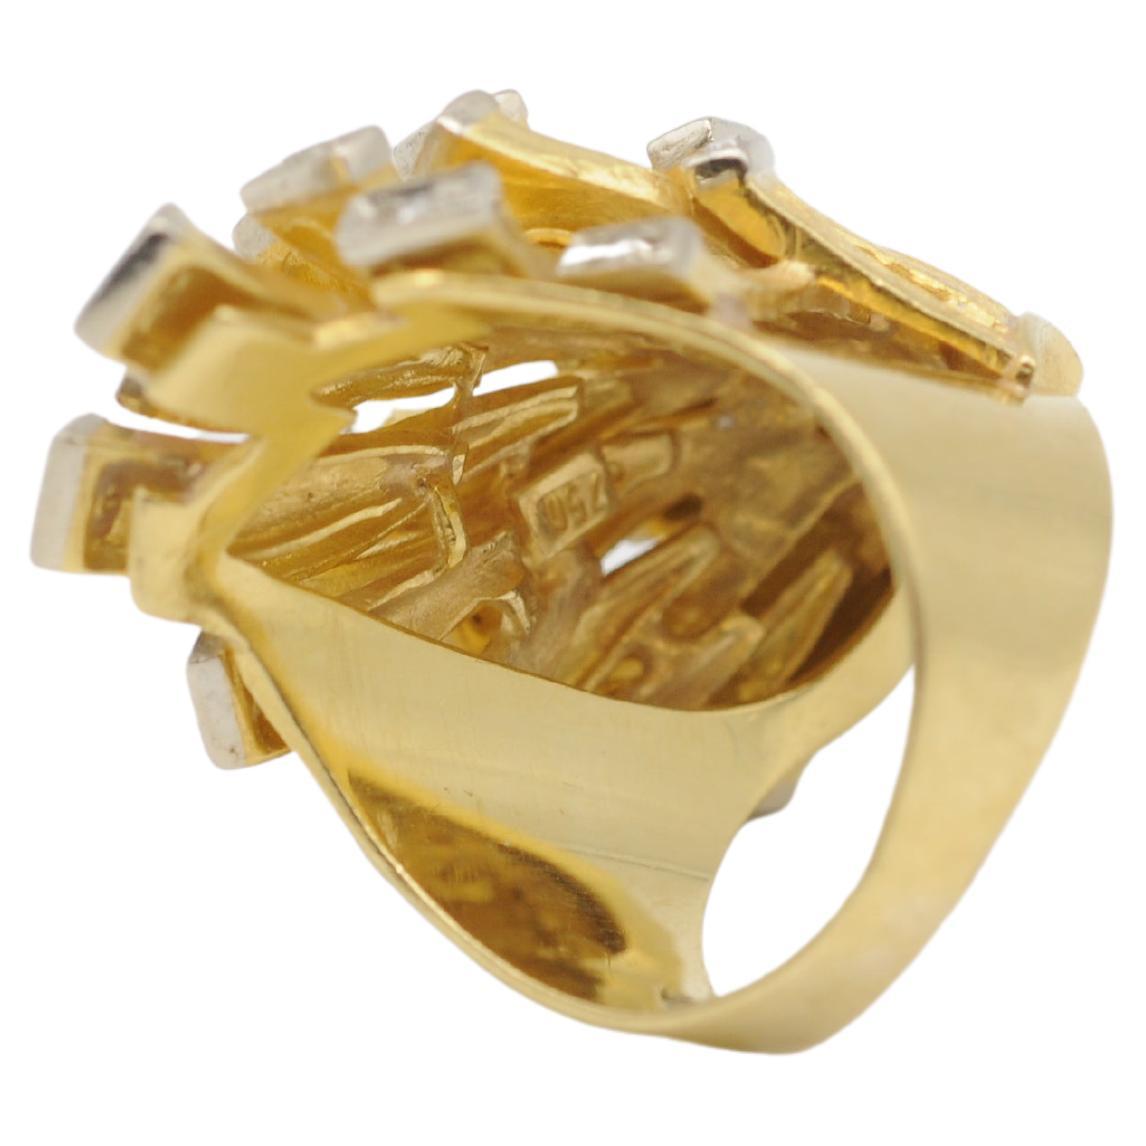 Brilliant Cut Unique Designer Ring 18K Yellow Gold with Brilliants For Sale